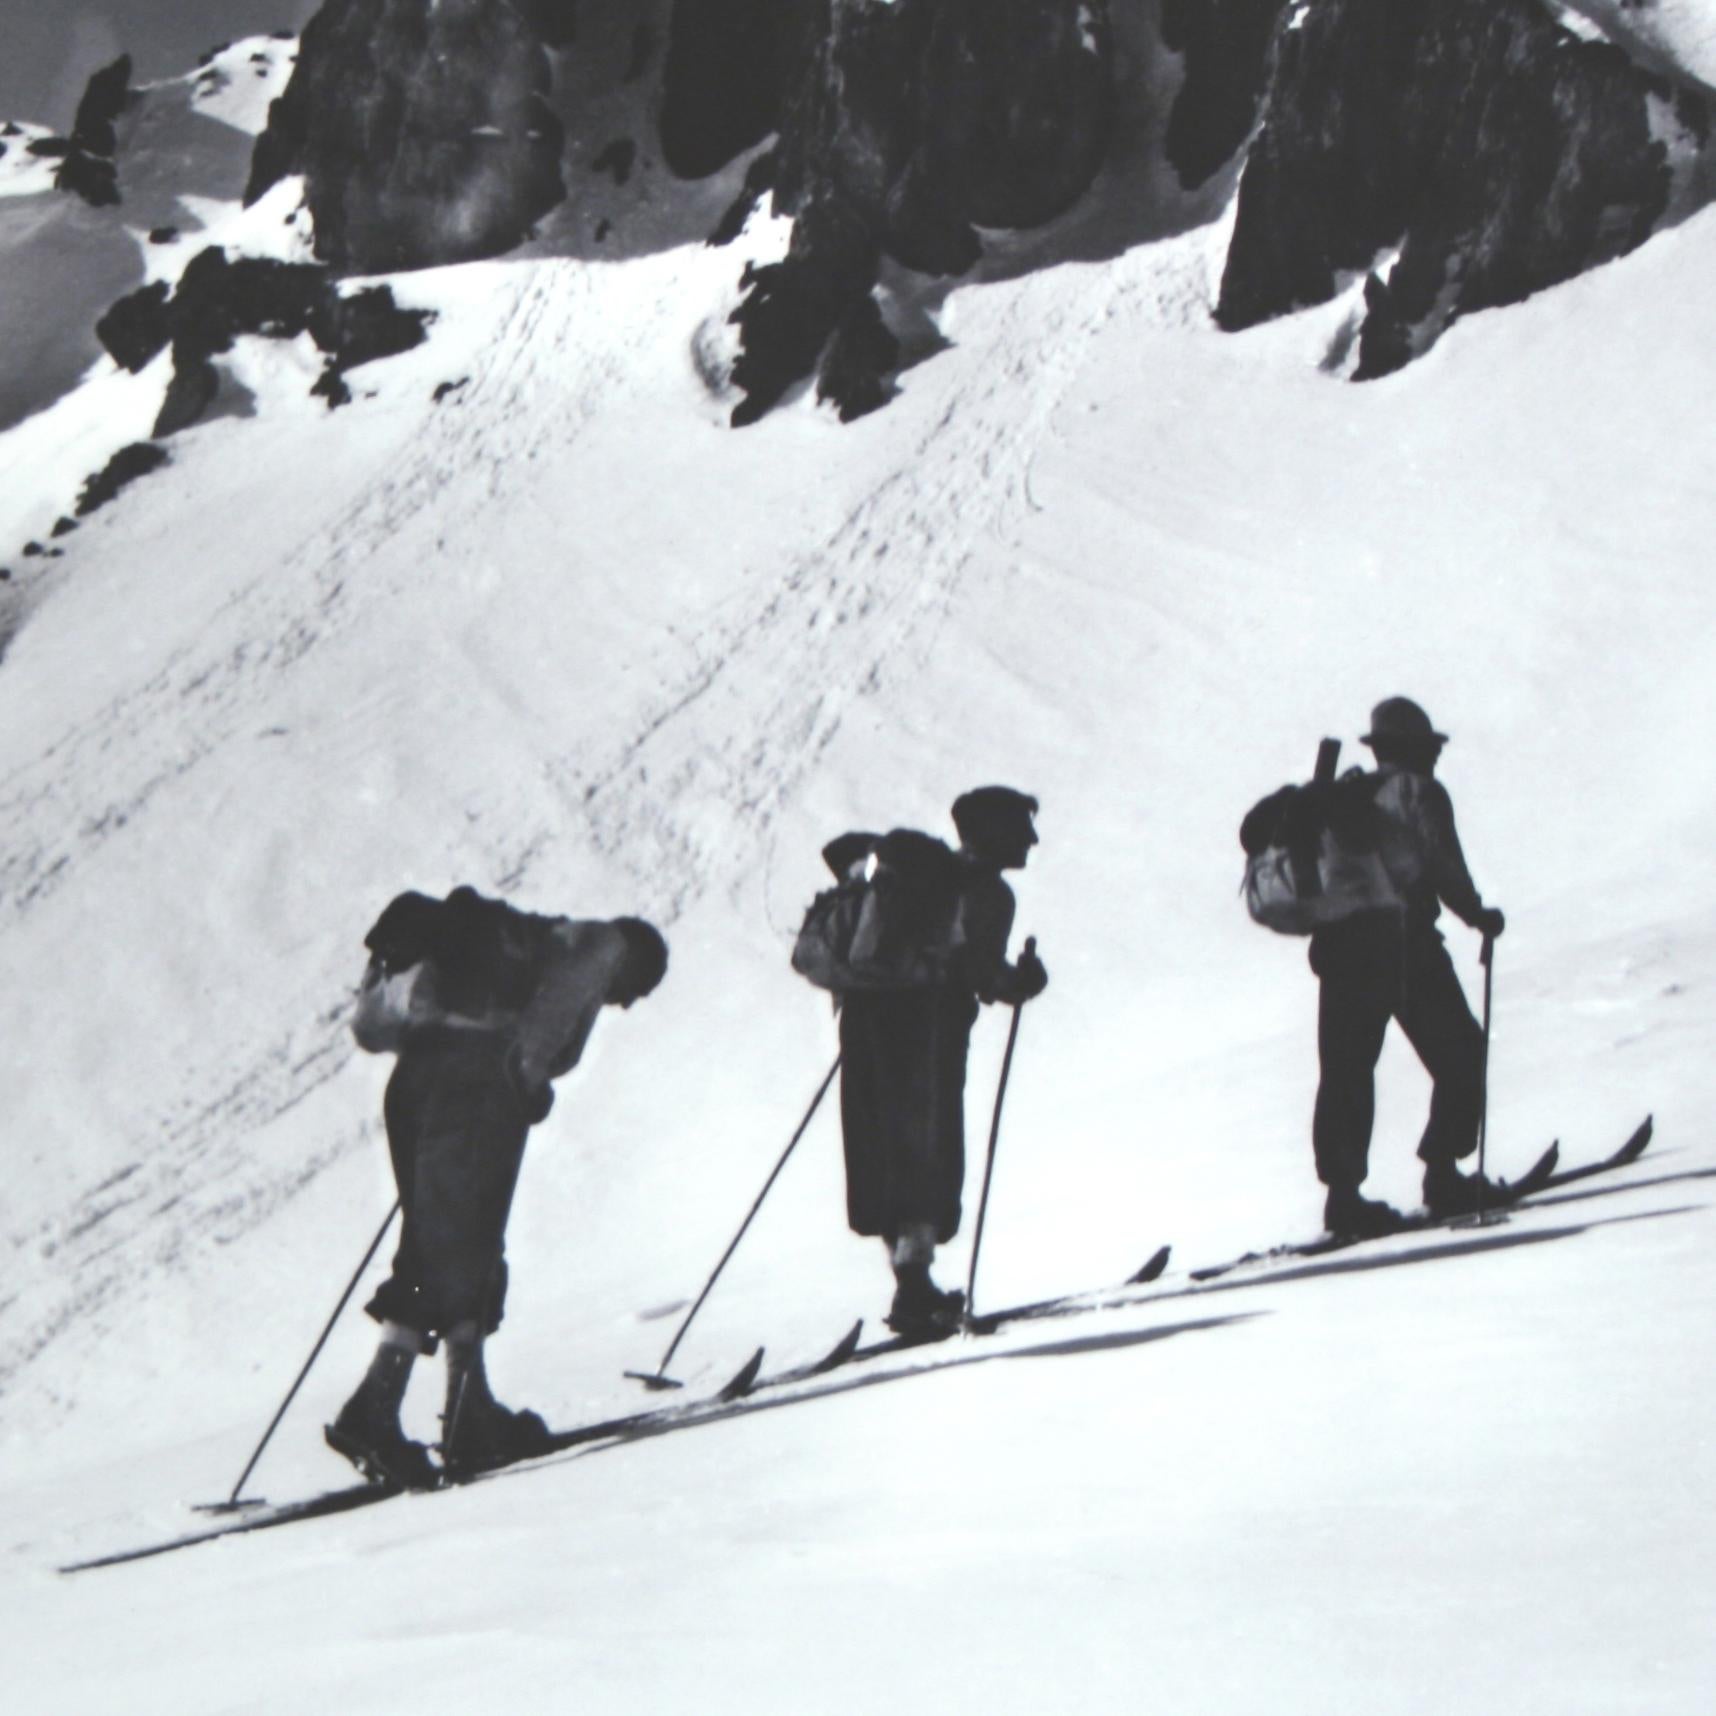 English Alpine Ski Photograph, 'Three Peaks' Taken from 1930s Original For Sale